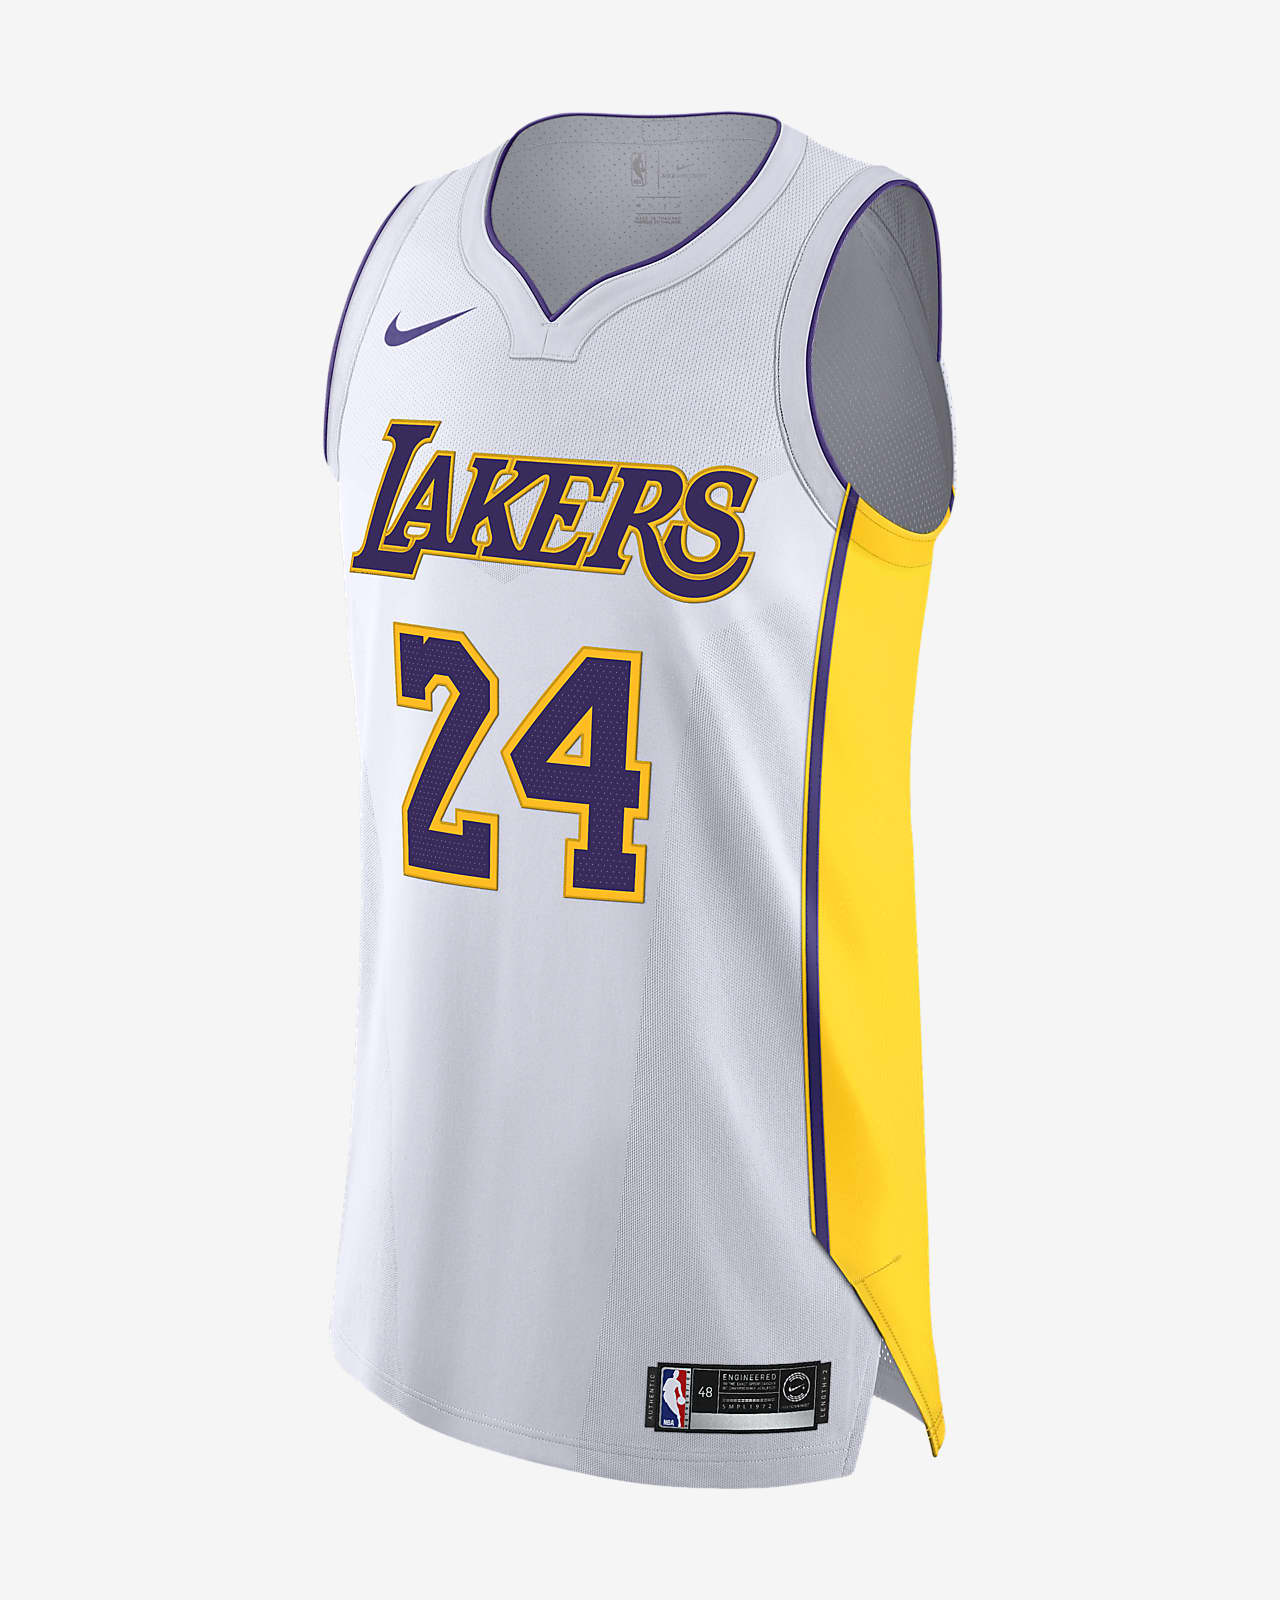 洛杉矶湖人队 (Kobe Bryant) Association Edition Authentic Nike NBA Jersey 男子球衣